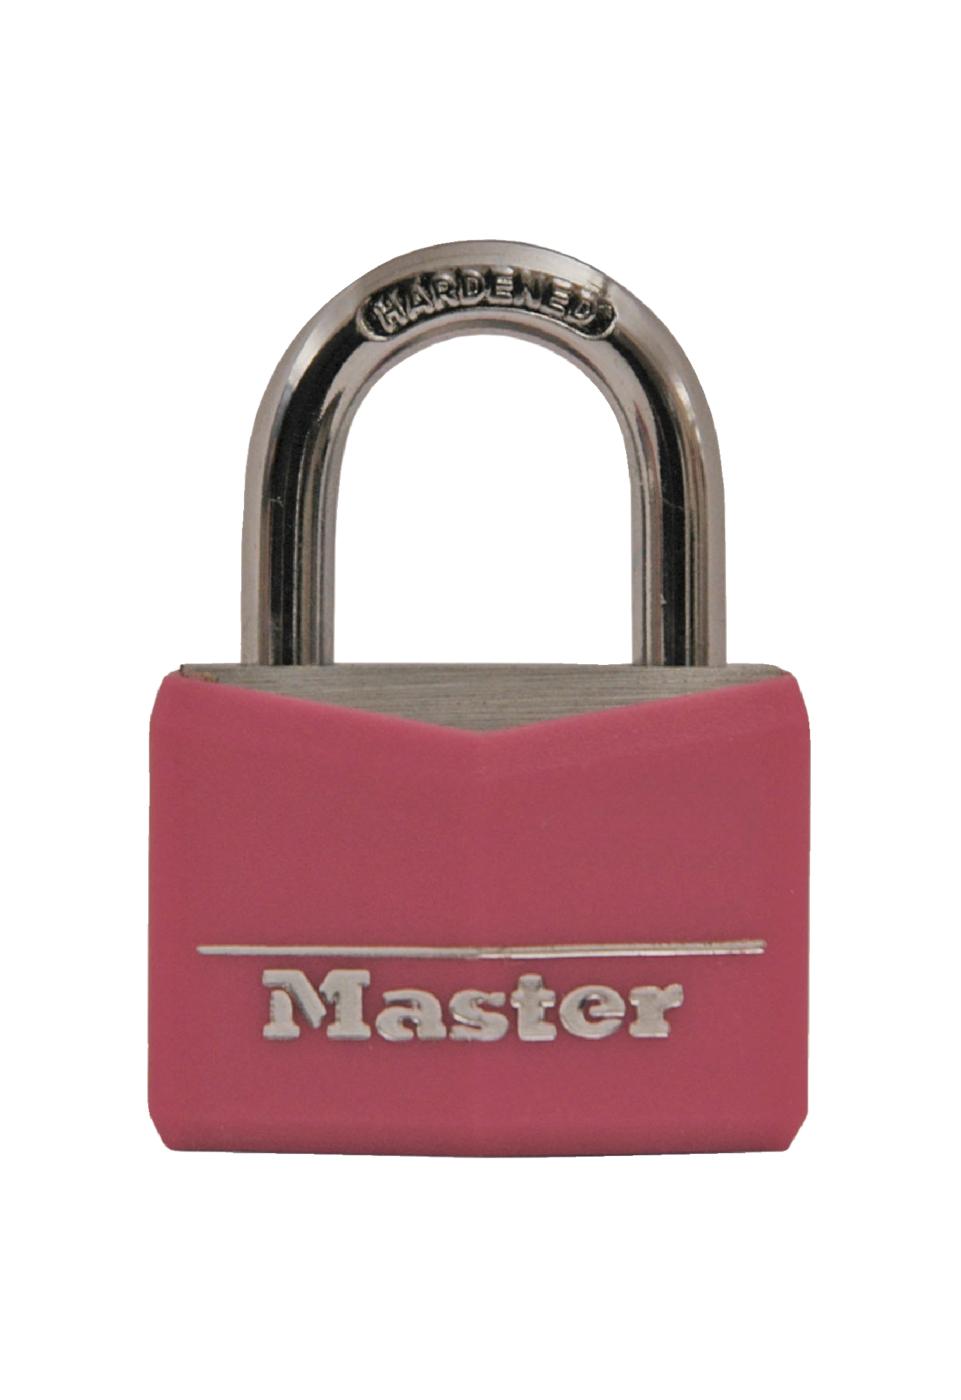 Master Lock 146D Solid Body Padlock - Pink; image 2 of 2